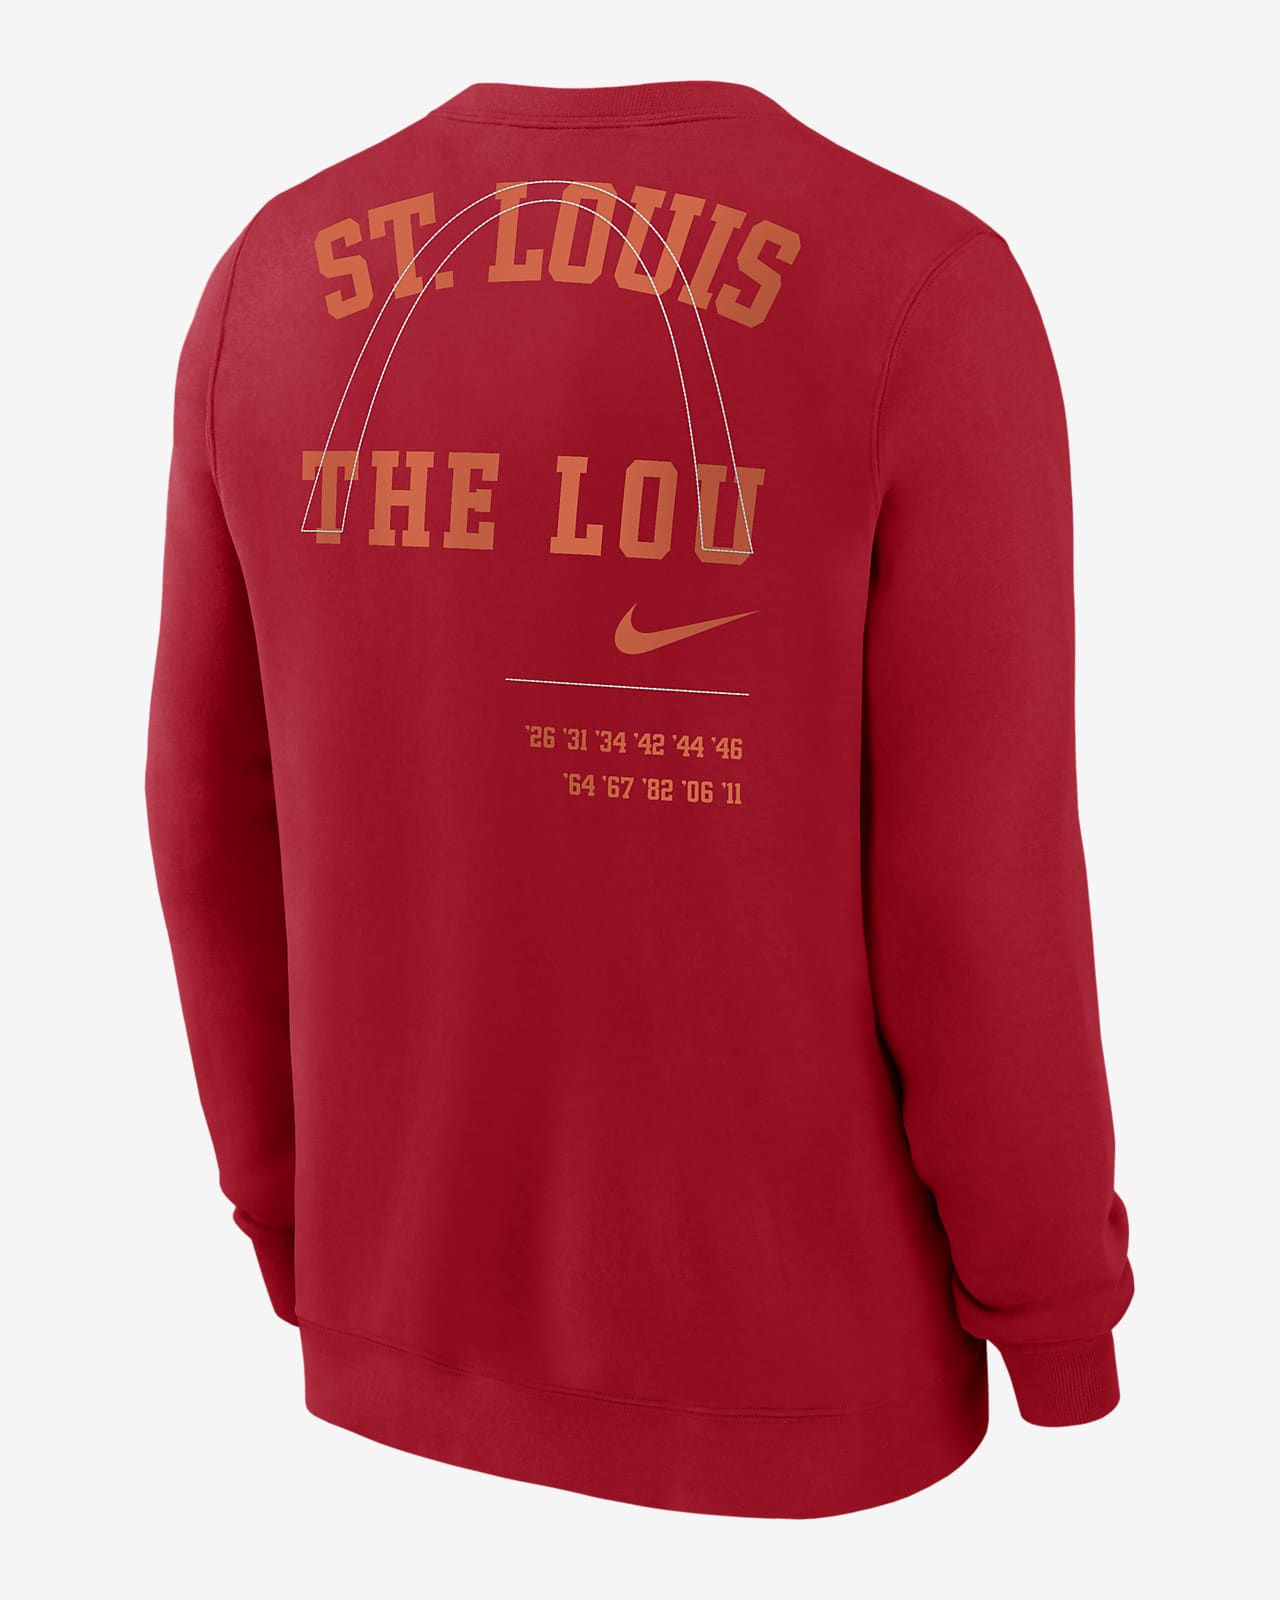 Cheap St. Louis Cardinals Sweatshirts, Discount Cardinals